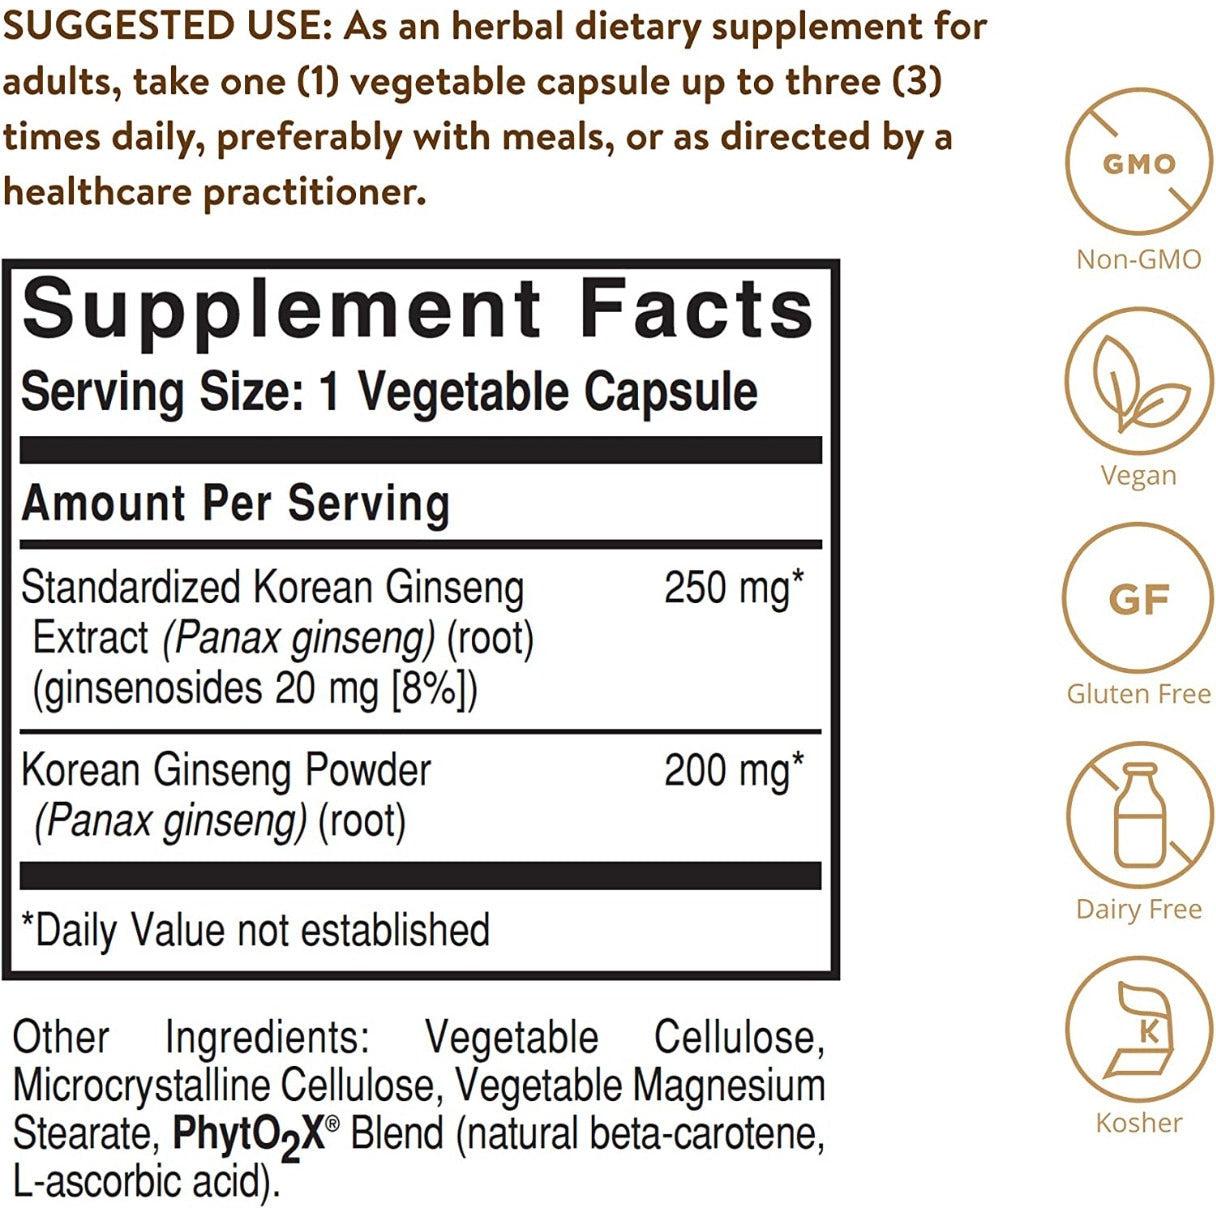 Solgar Korean Ginseng Root Extract 60 Vegetable Capsules